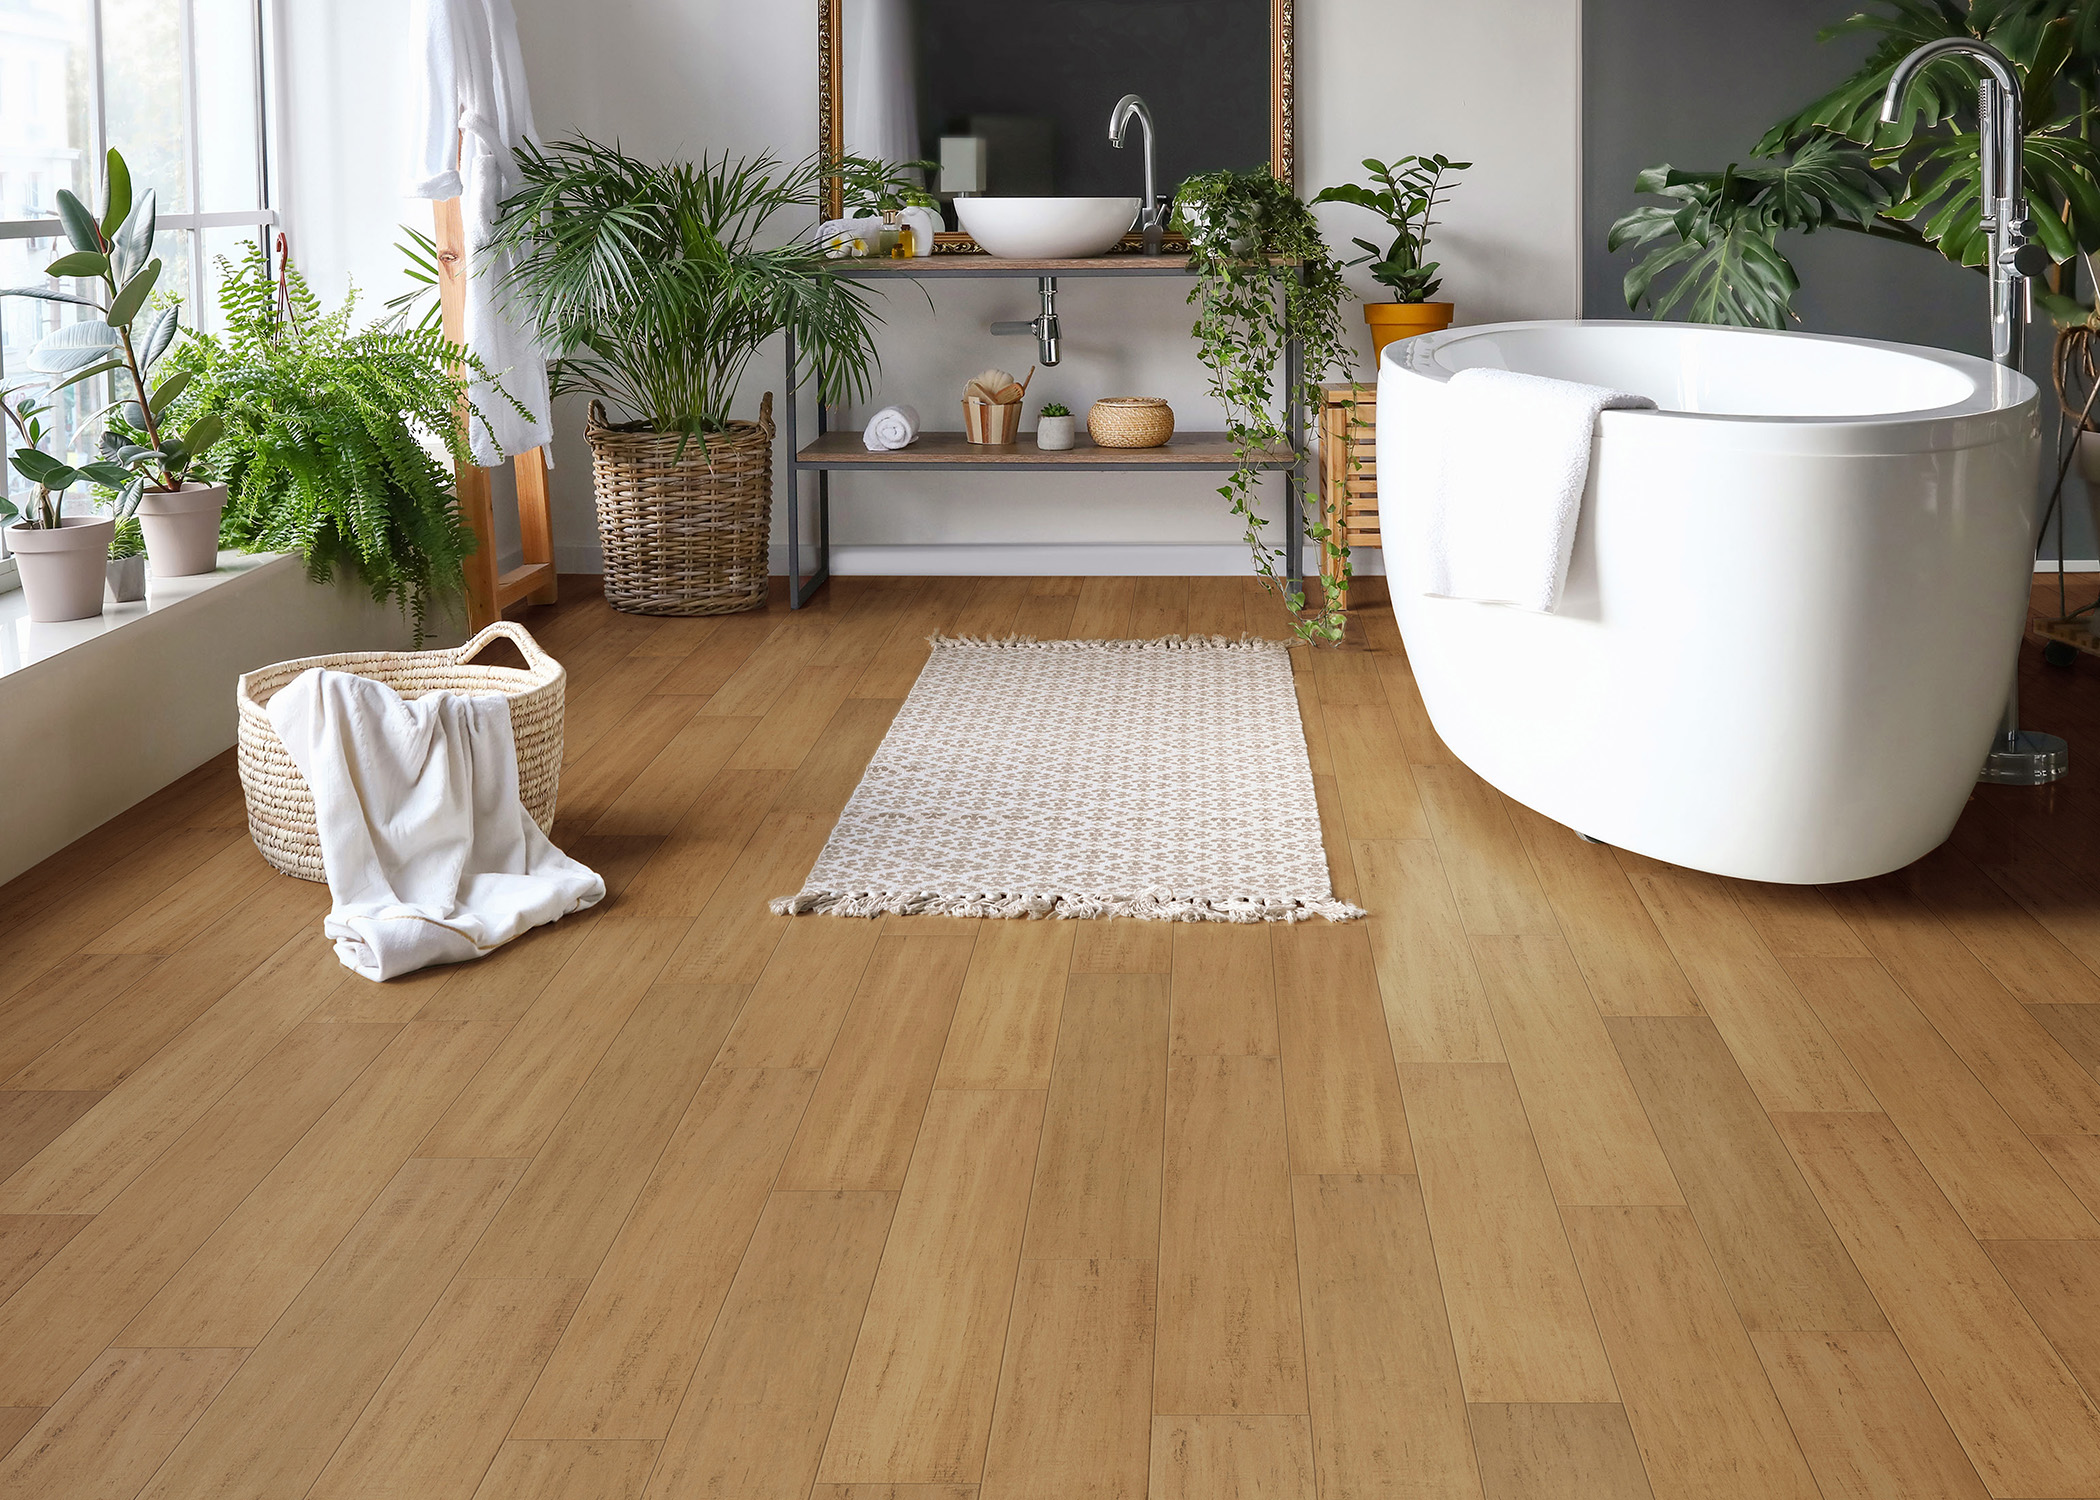 bathroom featuring water-resistant bamboo flooring